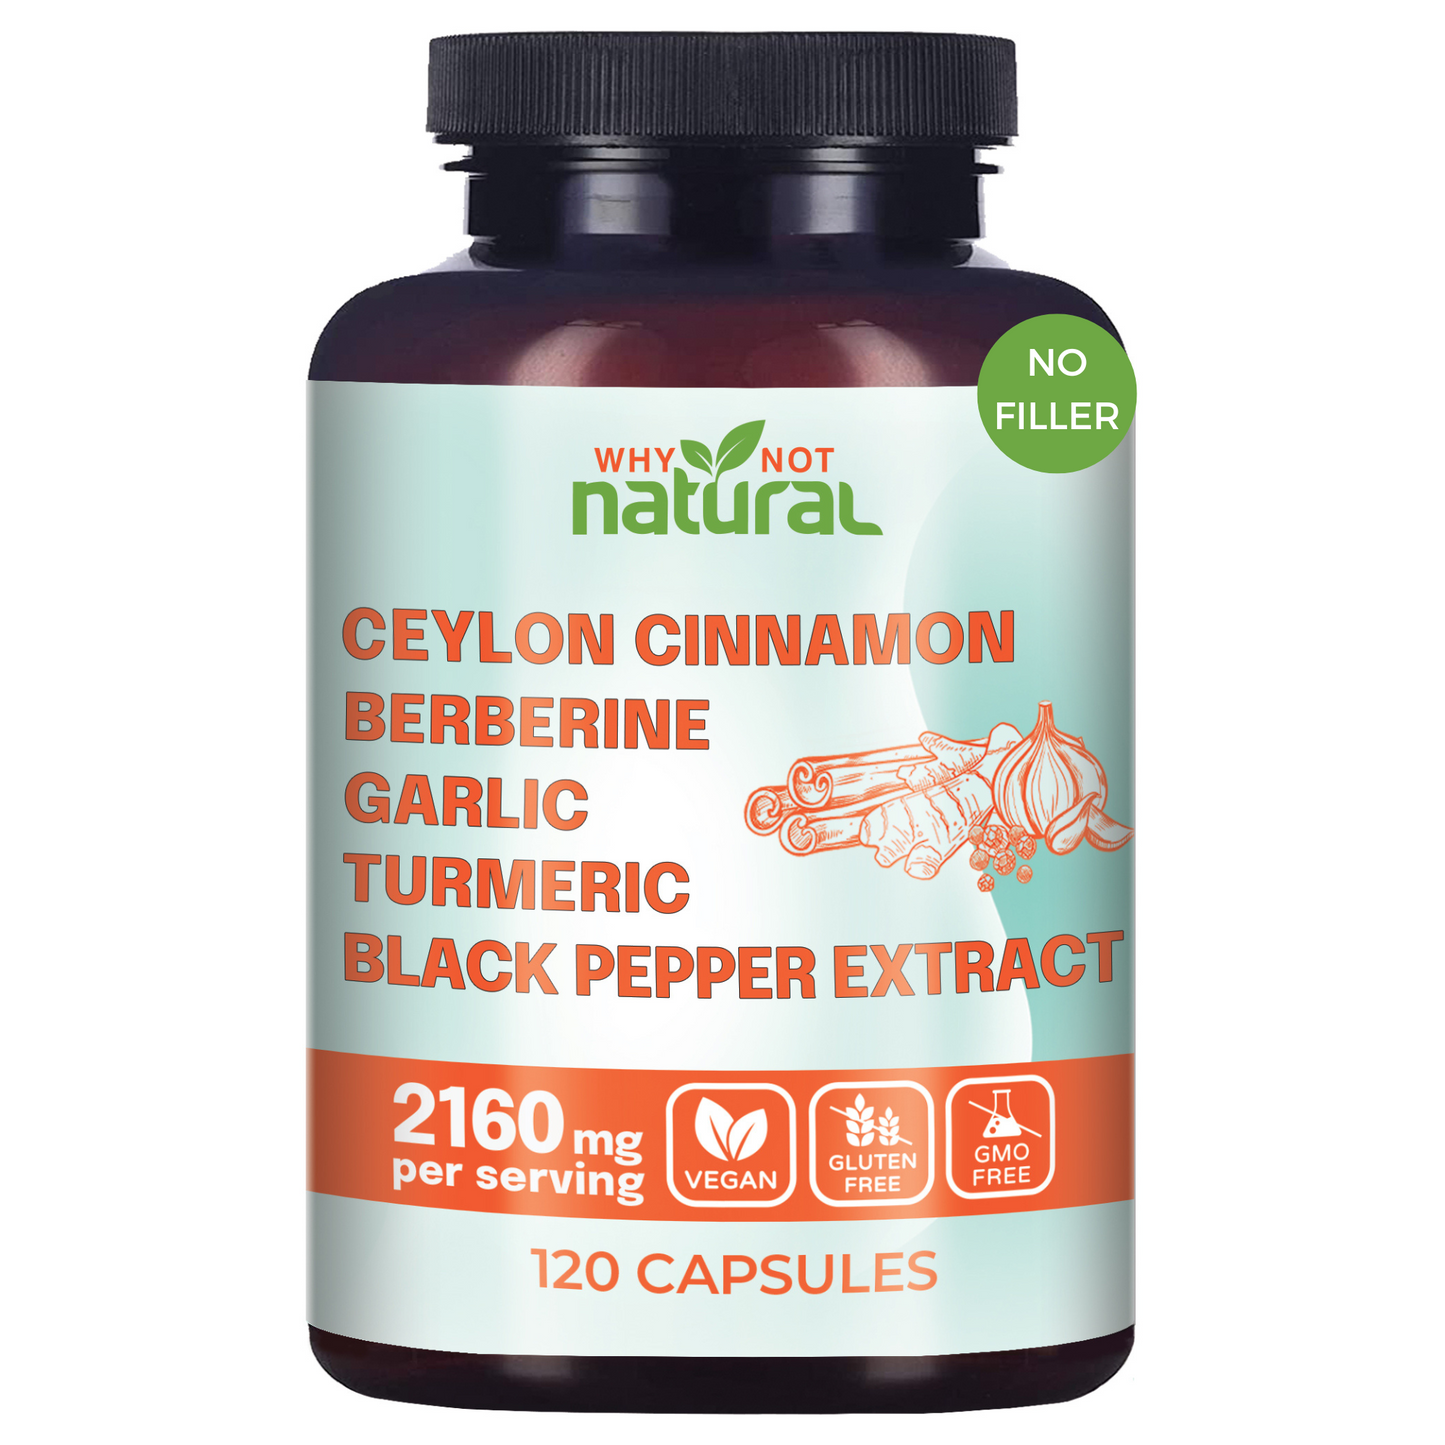 5-in-1 Organic Ceylon Cinnamon Capsules with Garlic, Berberine, Turmeric, Black Pepper Extract Pills - inflammatory Supplement and Blood Sugar Support